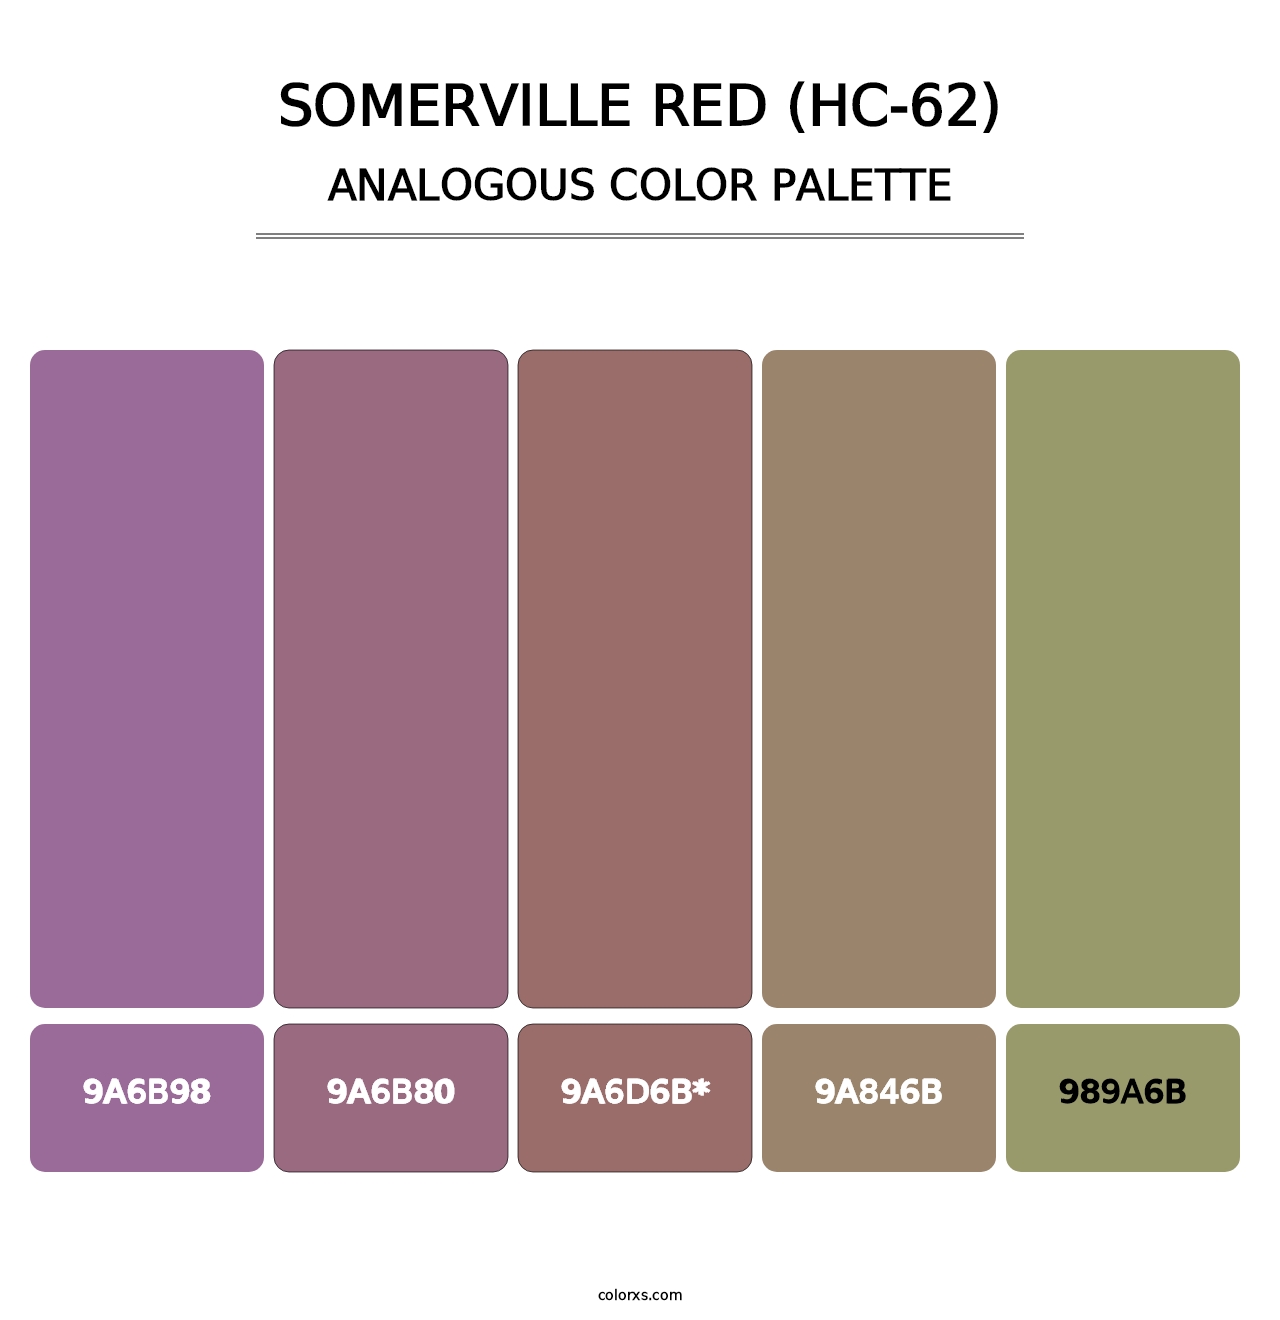 Somerville Red (HC-62) - Analogous Color Palette